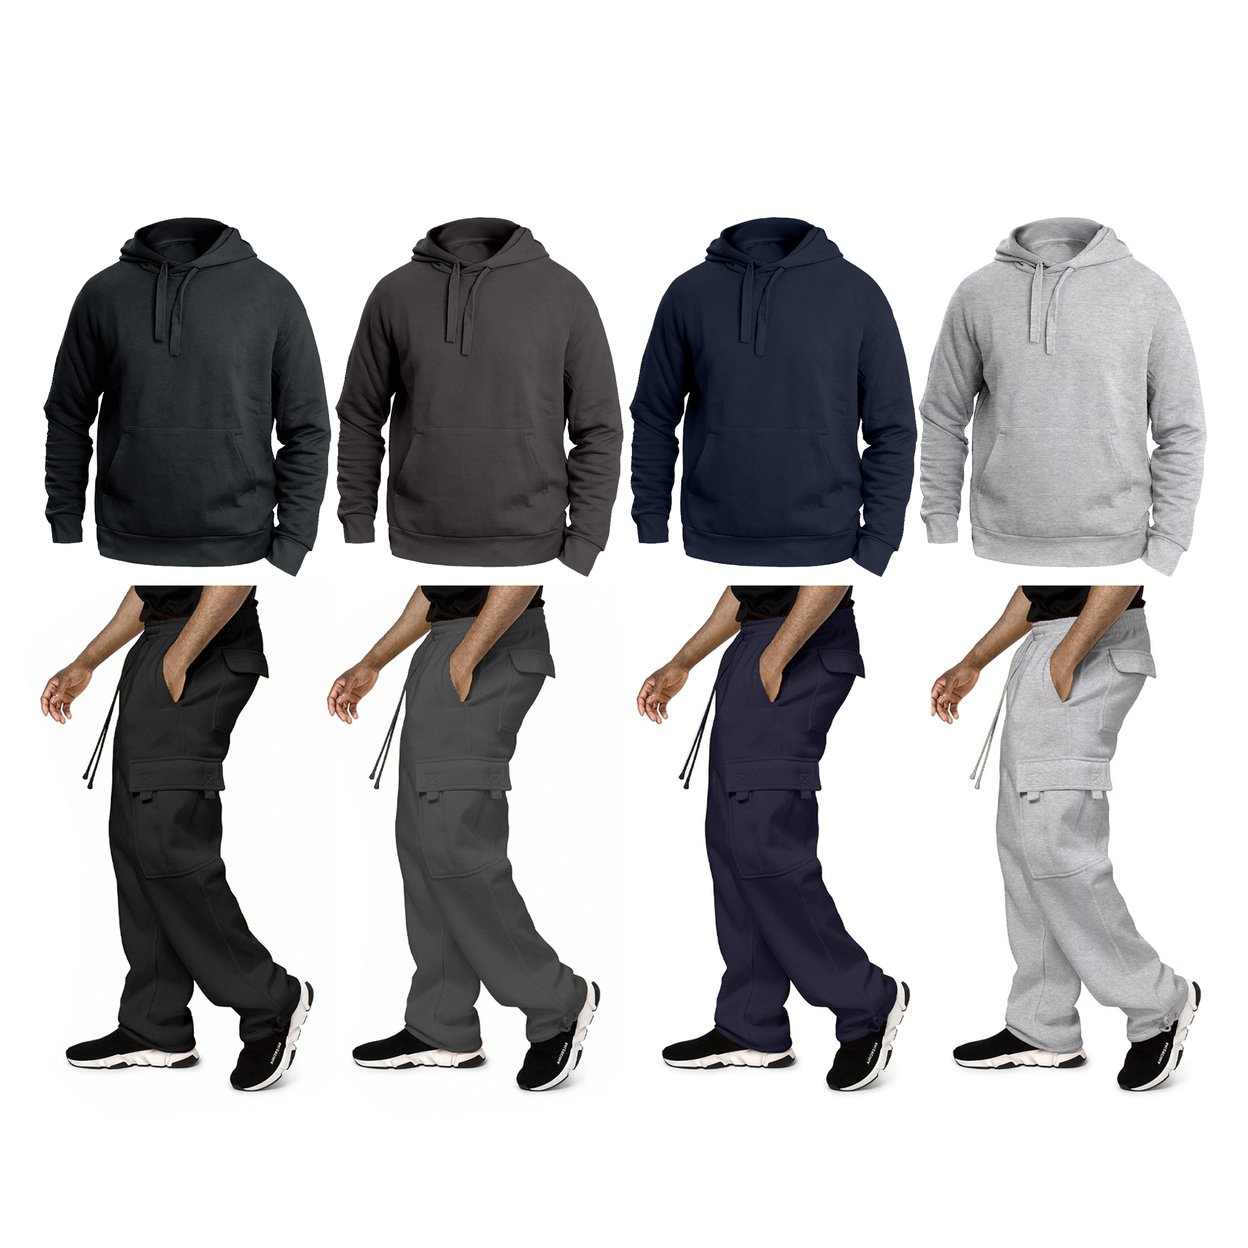 Multi-Pack: Big & Tall Men's Winter Warm Cozy Athletic Fleece Lined Multi-Pocket Cargo Sweatsuit - Charcoal, 2-pack, 3xl